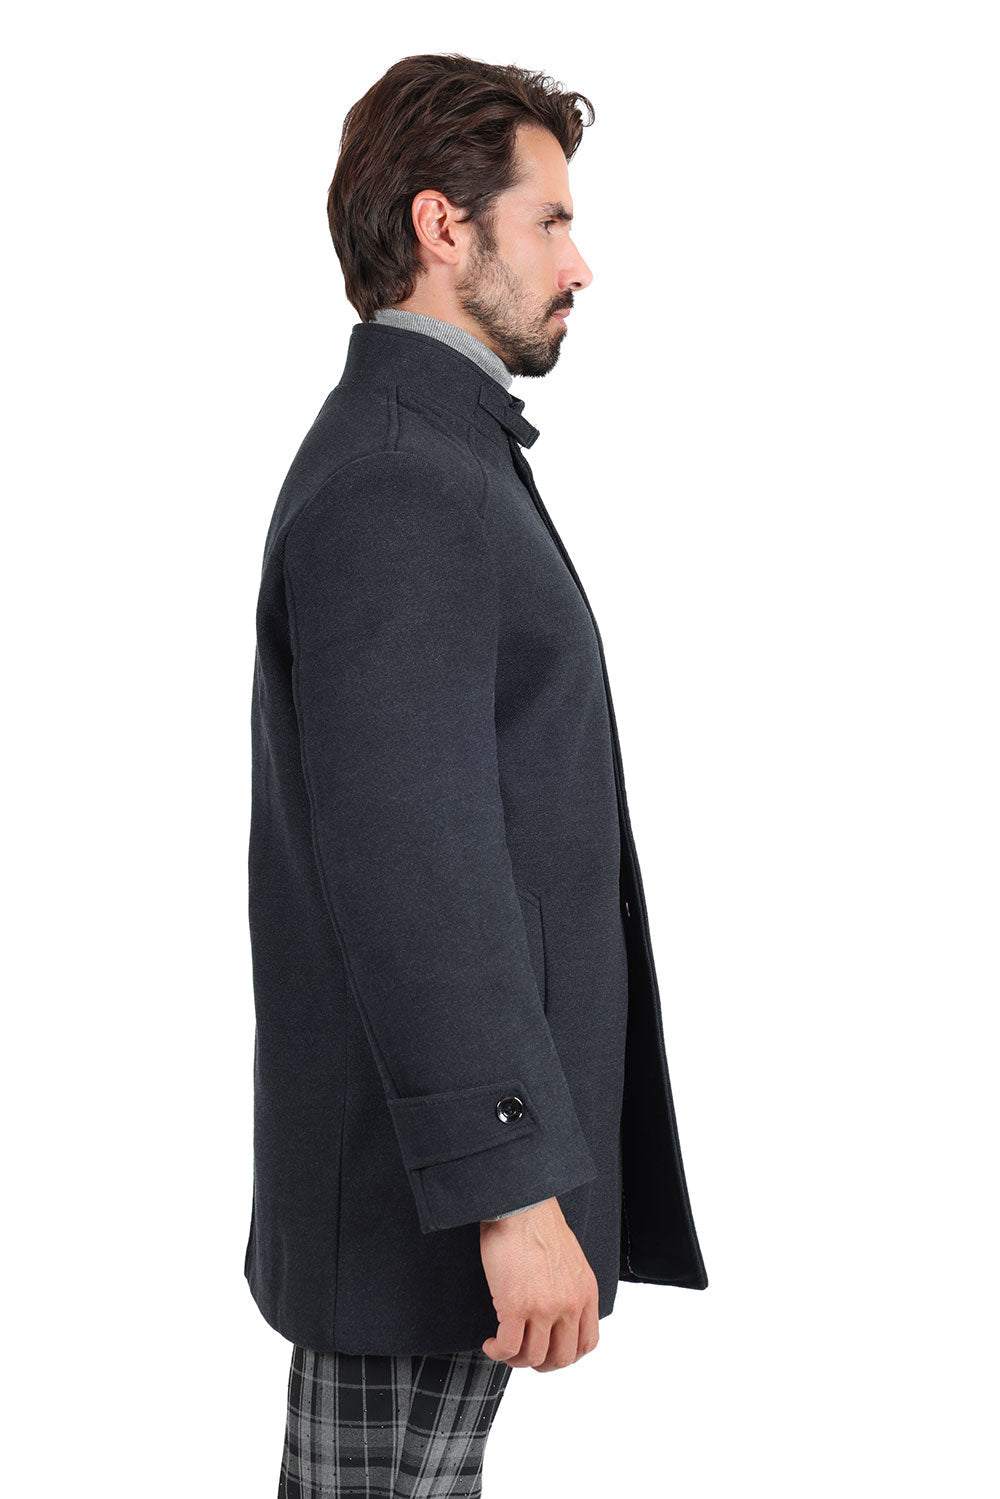 Barabas Men's Solid Color Luxury Collared Over Coat Jacket 2JLW03